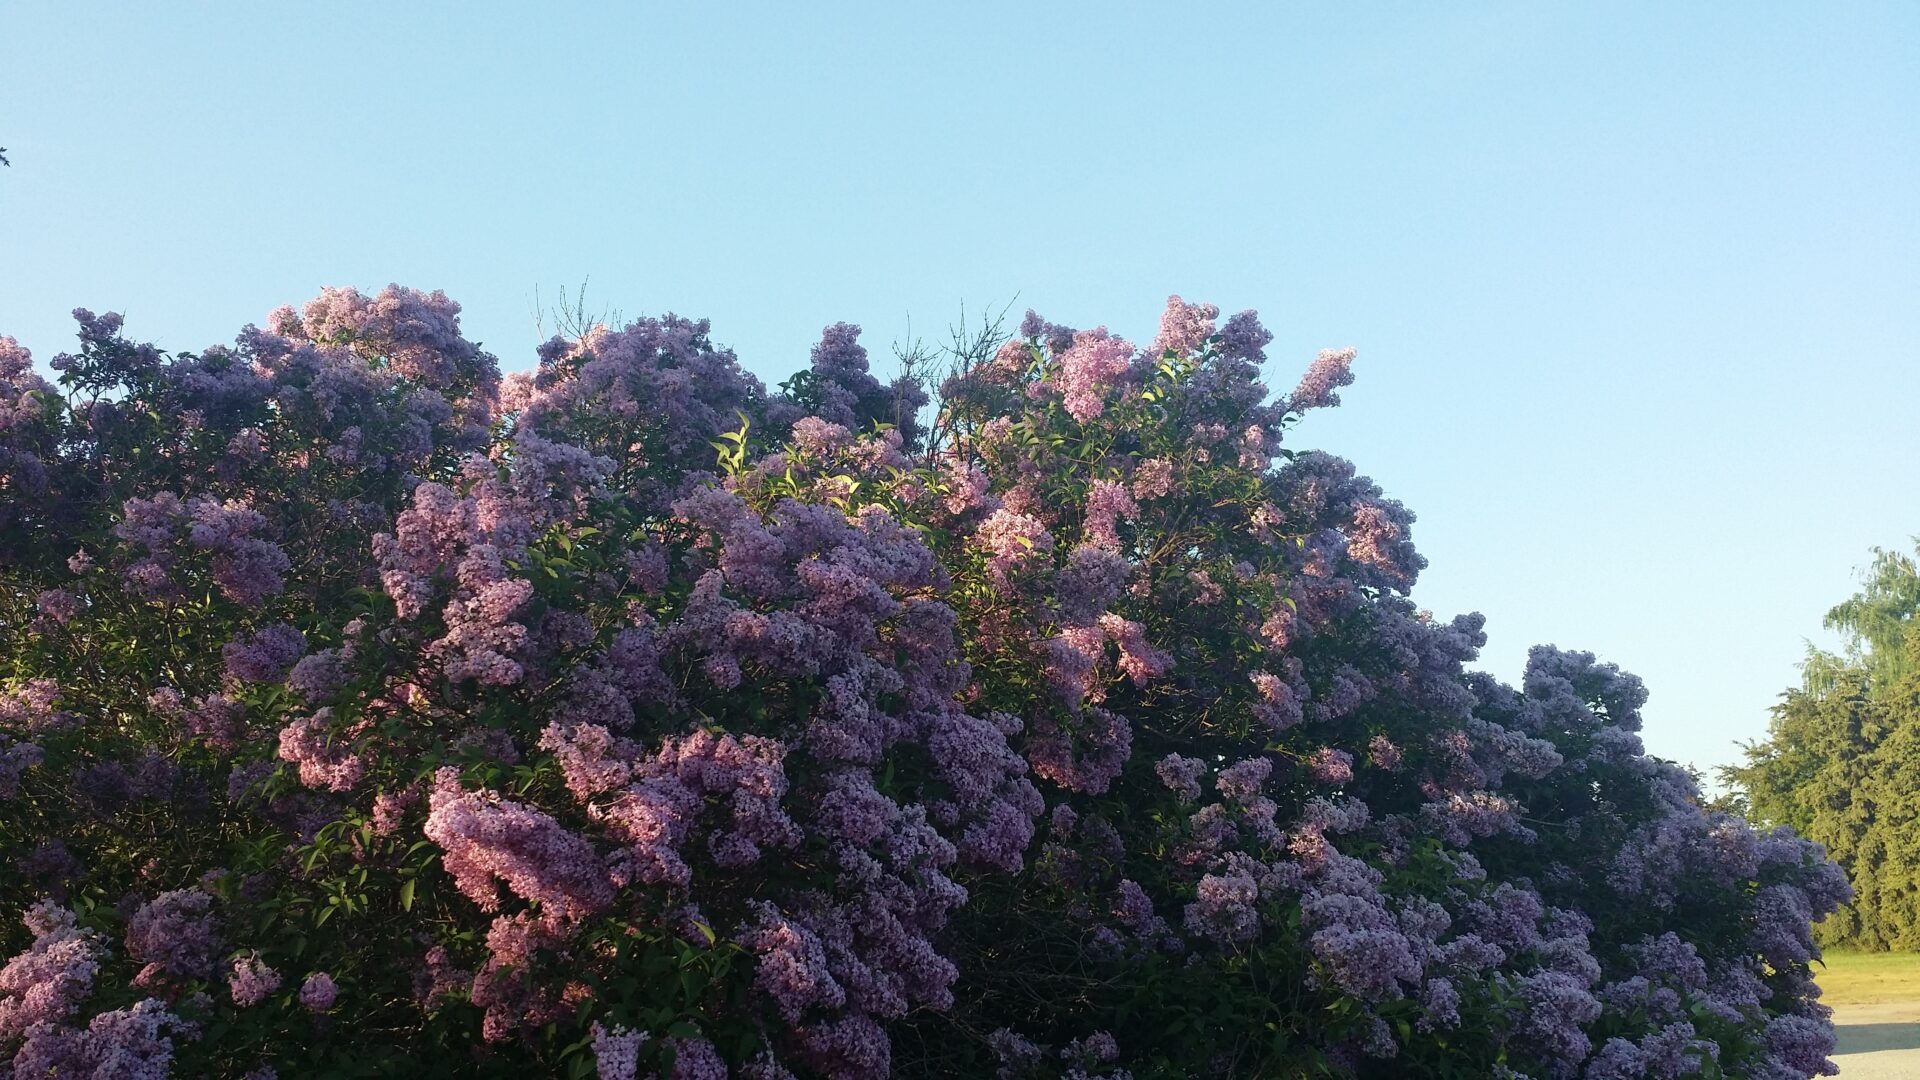 Lilac 'Common